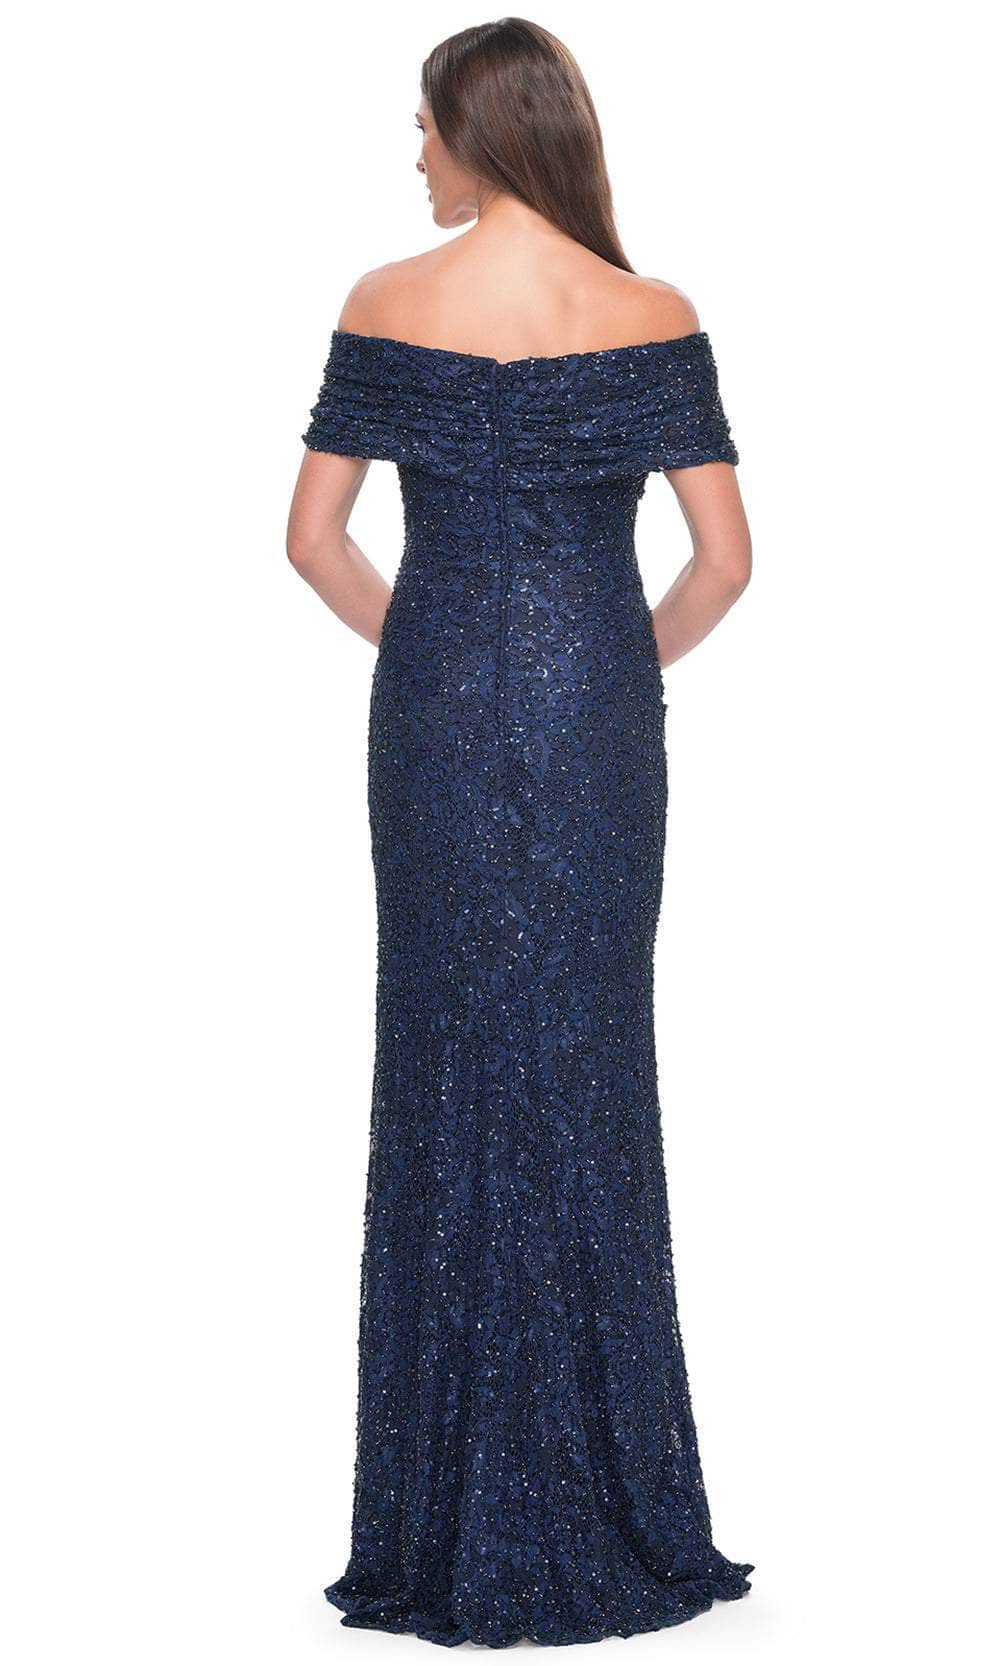 La Femme 31778 - Lace Sheath Evening Dress Evening Dresses